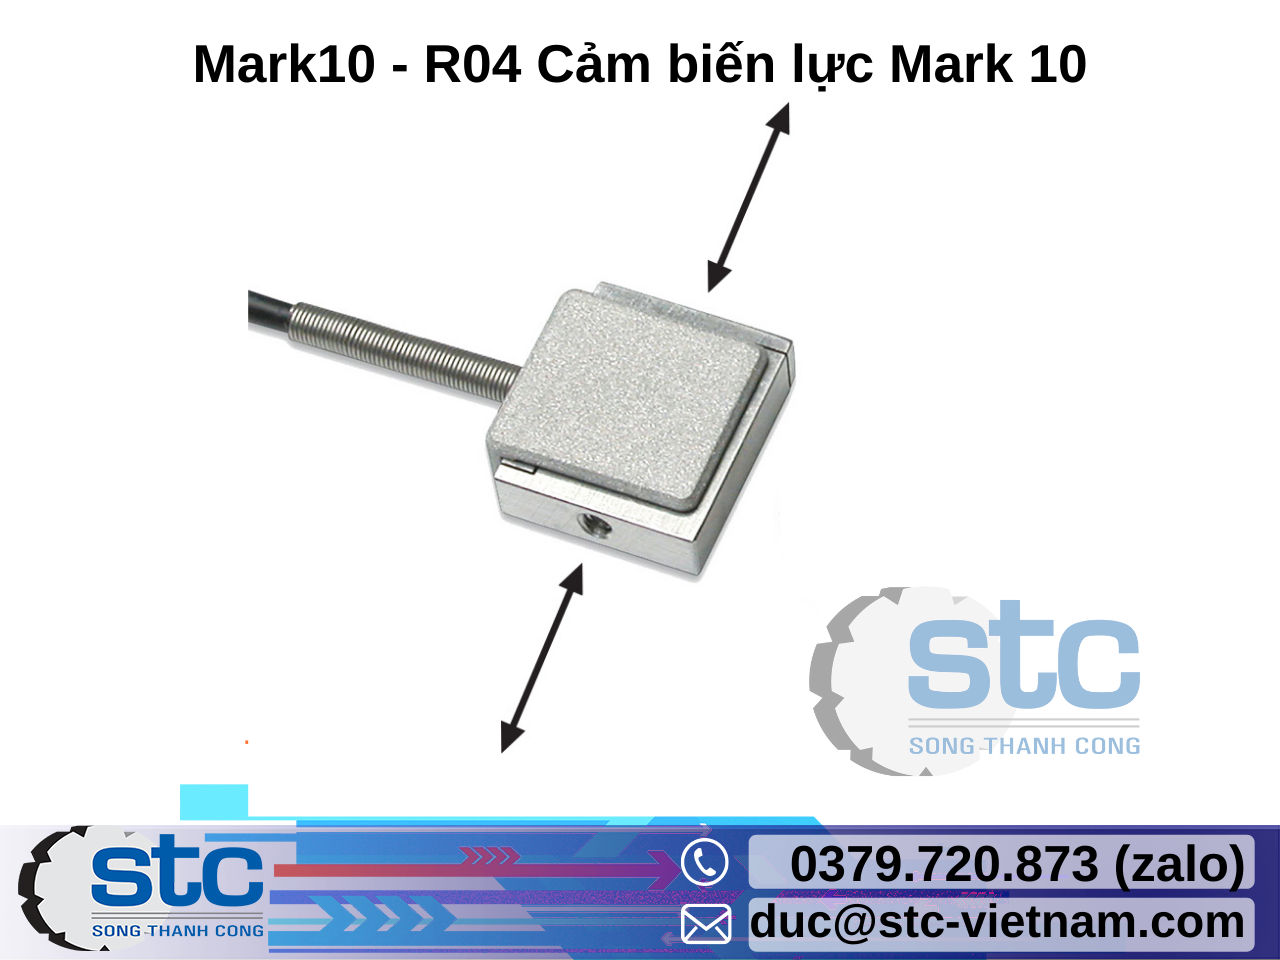 mark10-r04-cam-bien-luc-mark-10.png